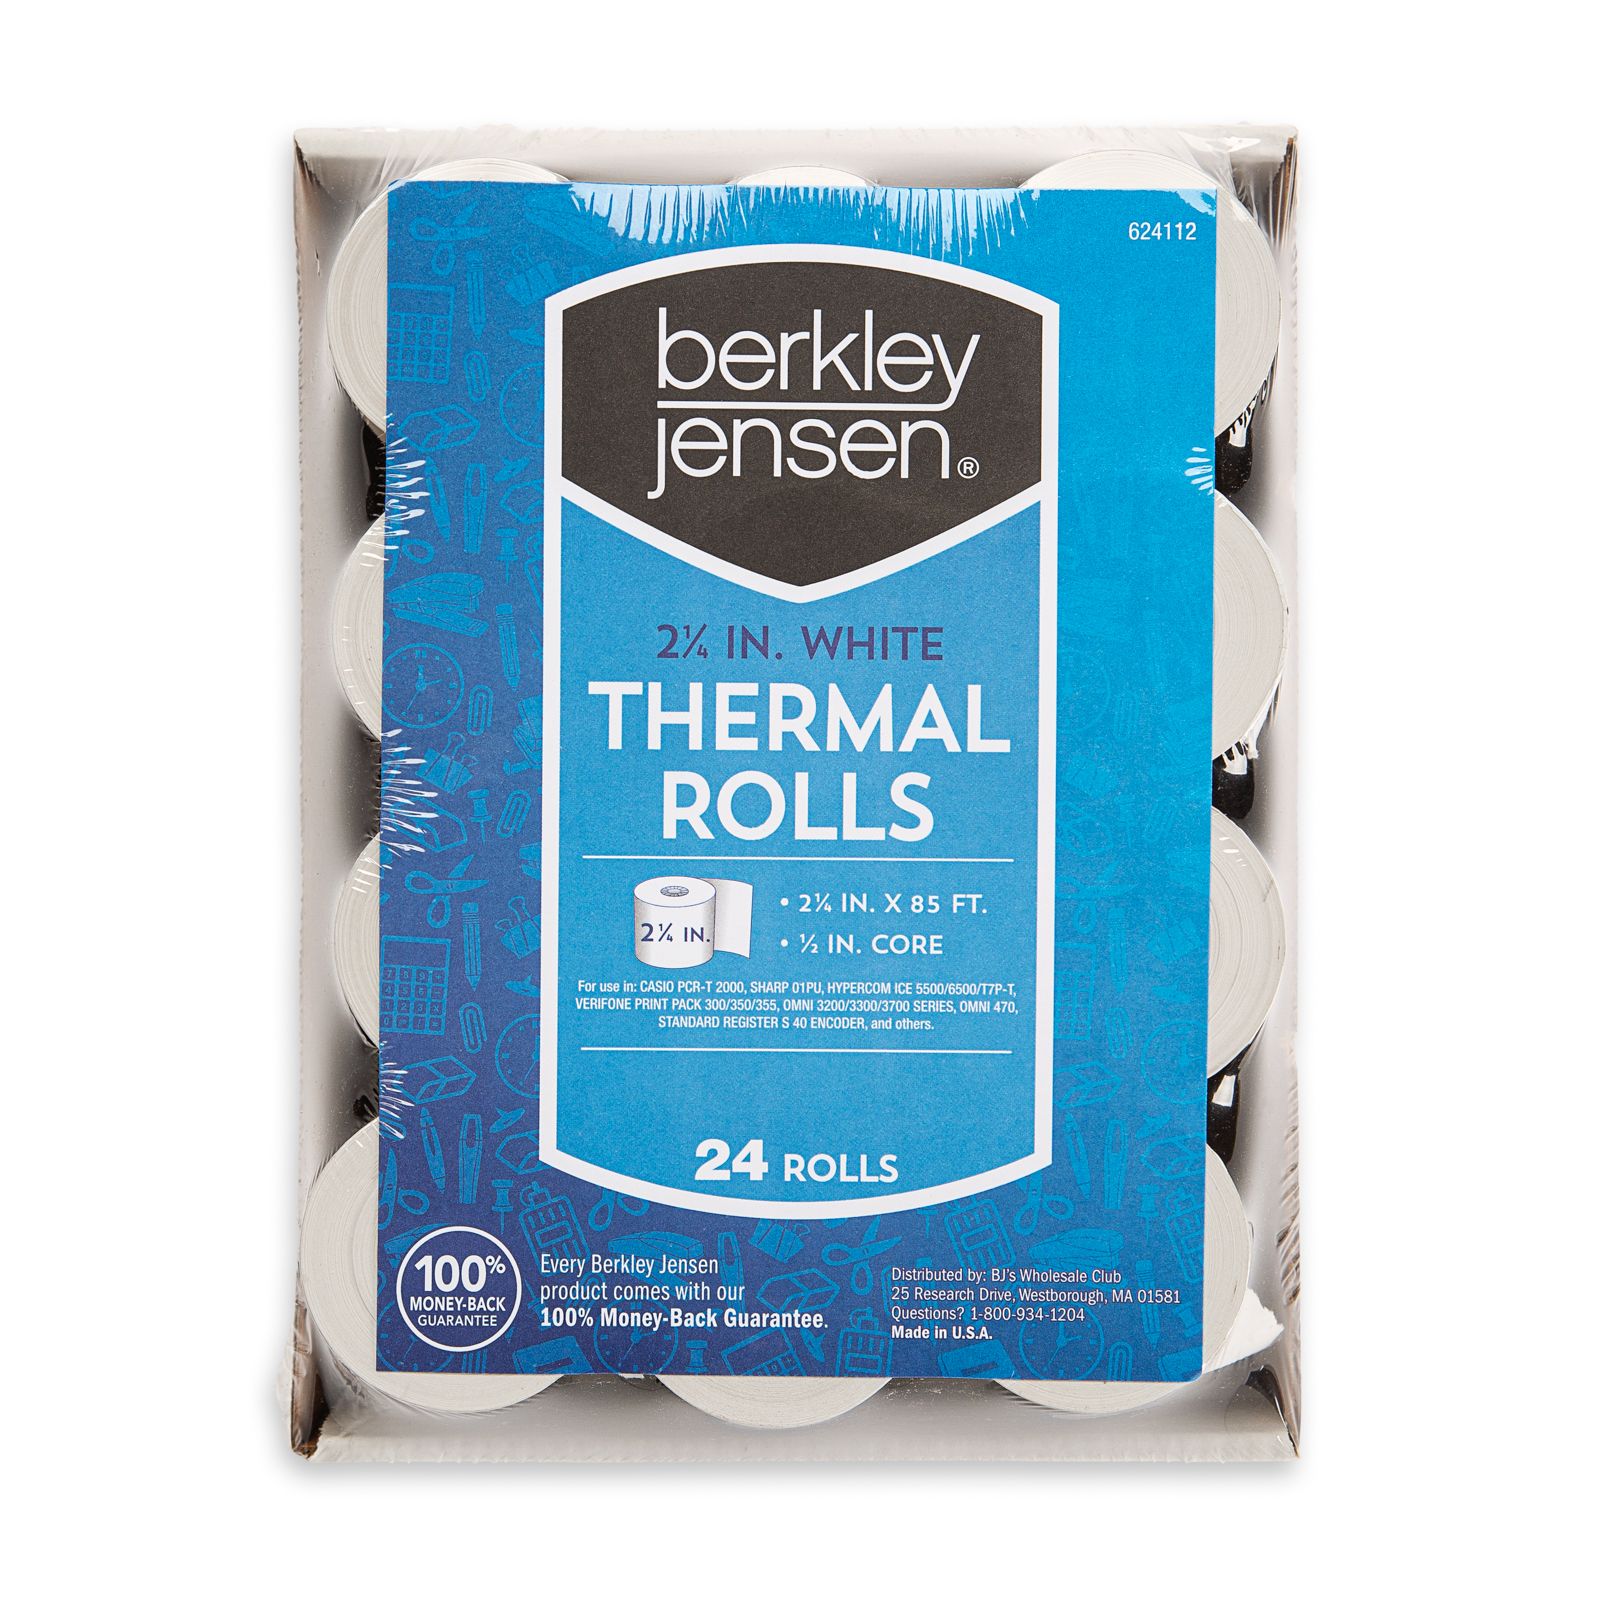 Berkley Jensen Thermal Paper Rolls, 24 pk.